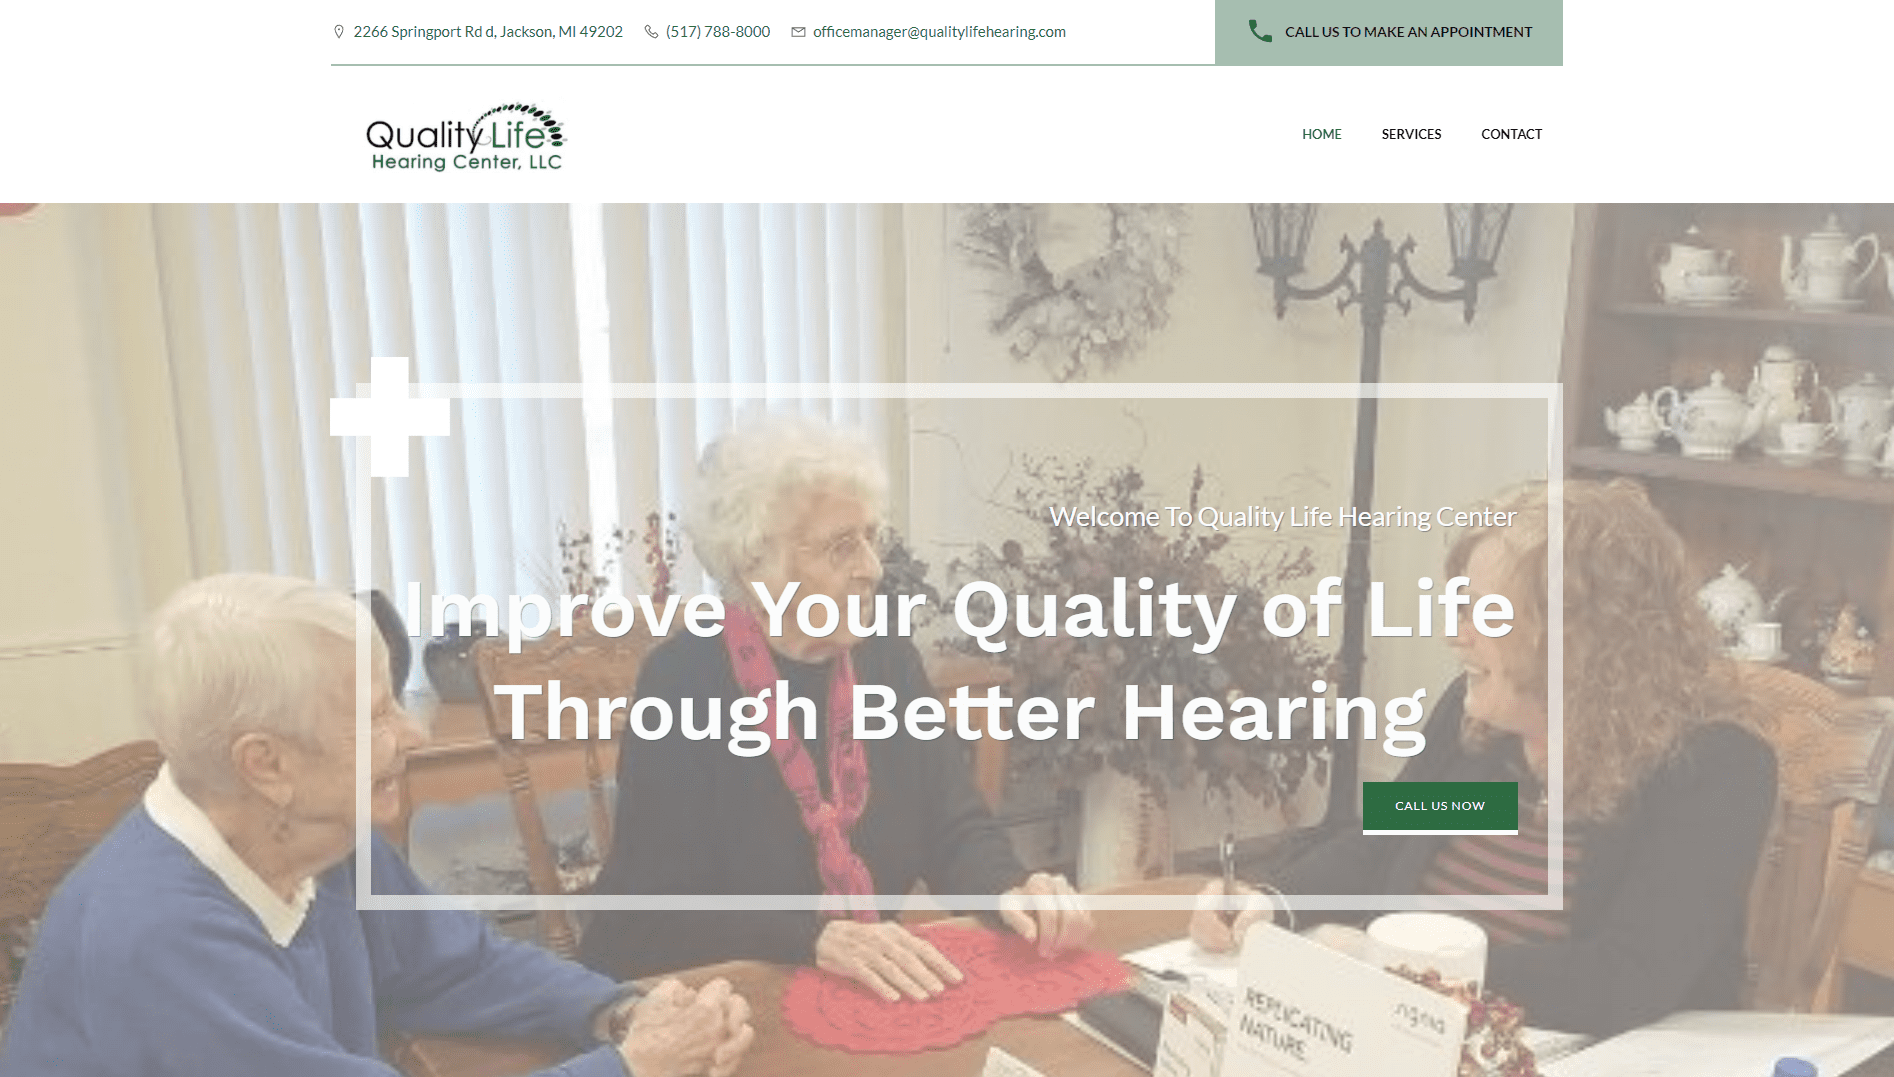 Quality Life Hearing